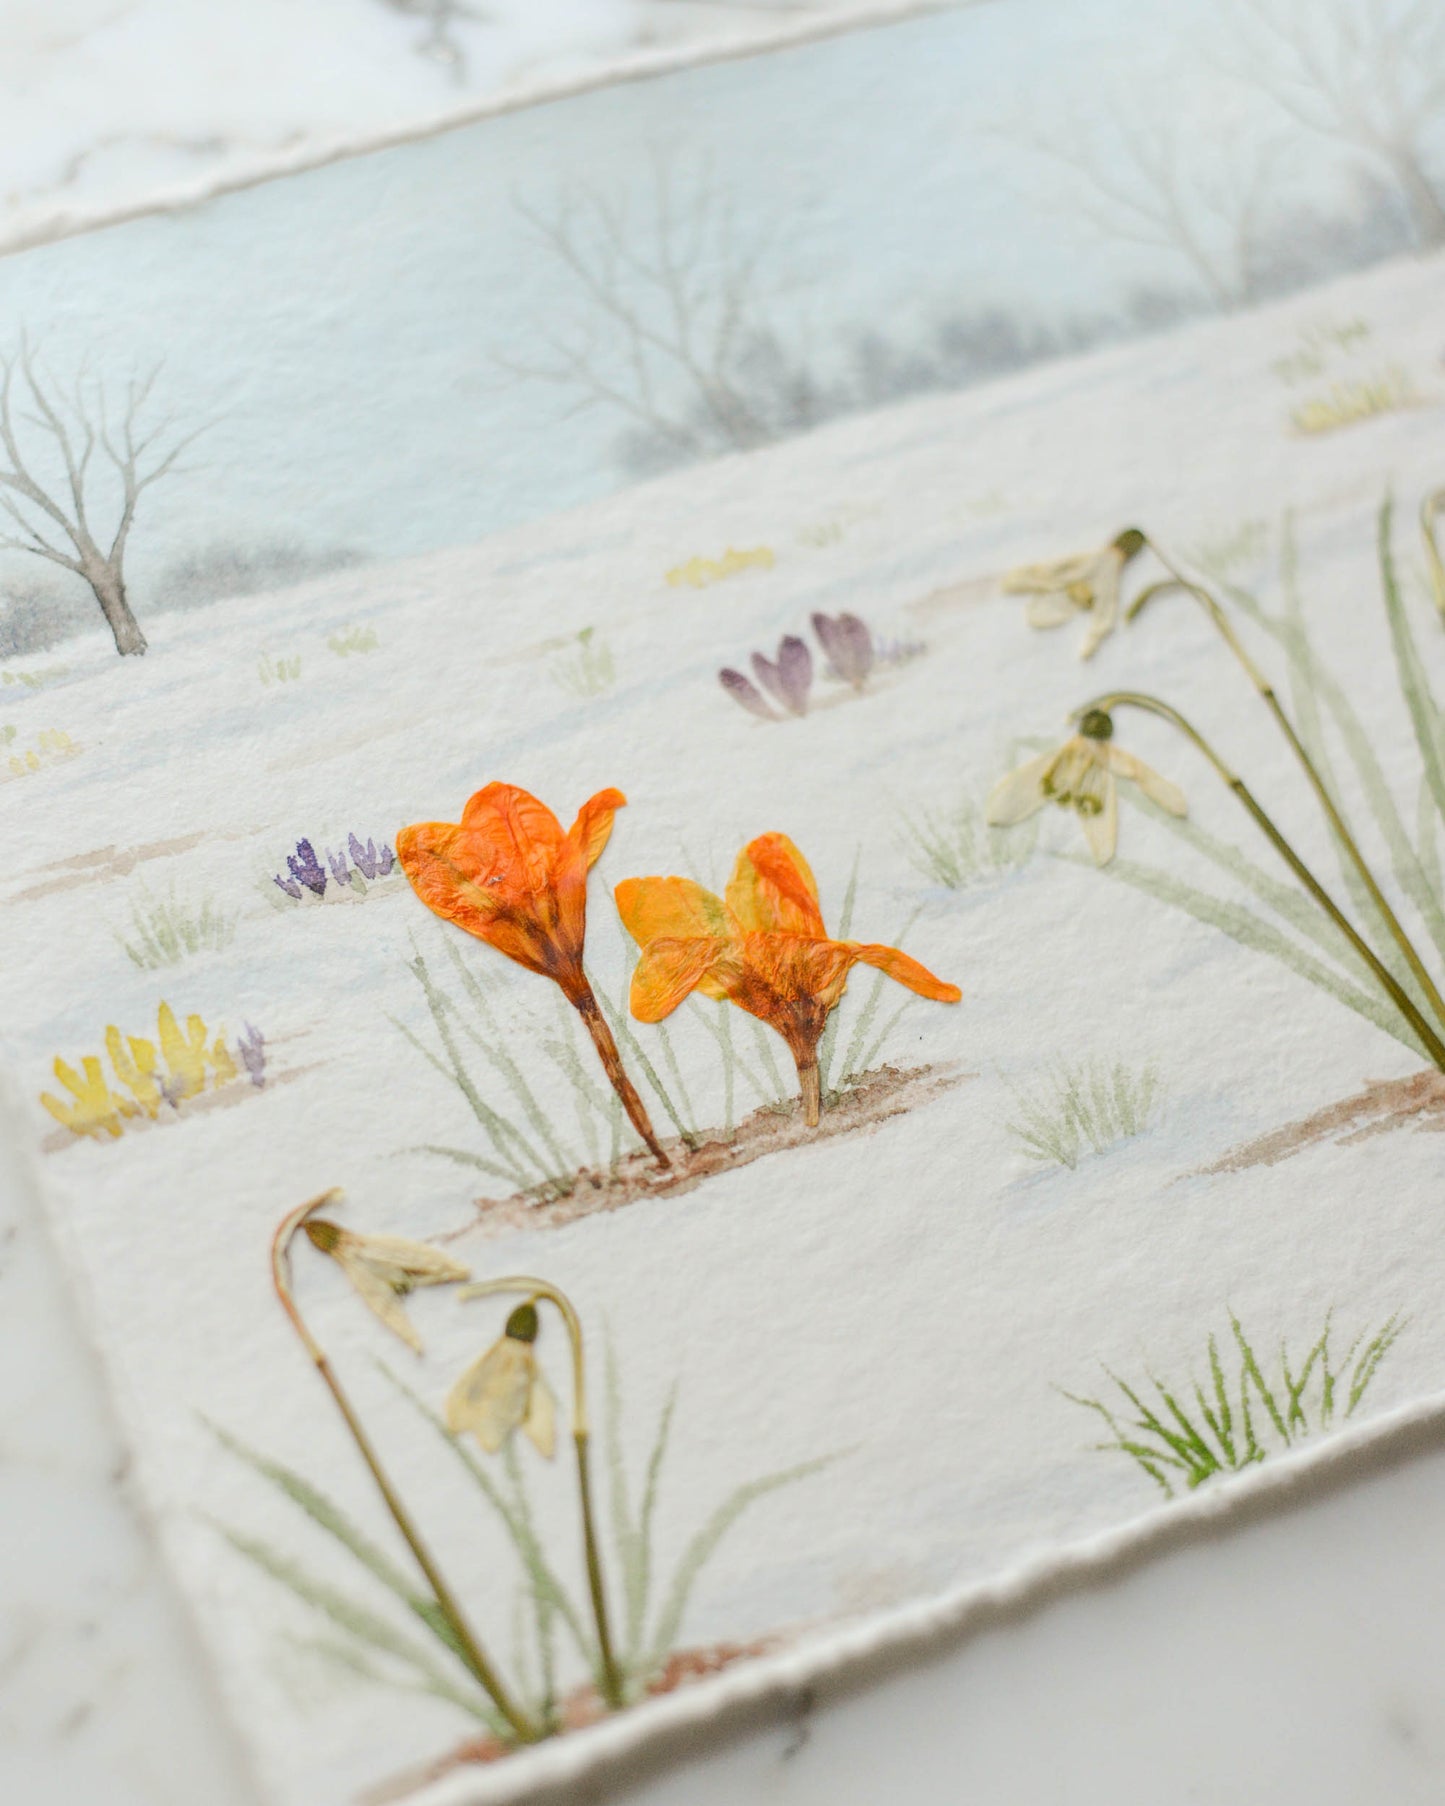 Harbingers of Spring - Original Artwork, 8x10" Watercolor and Pressed Flowers